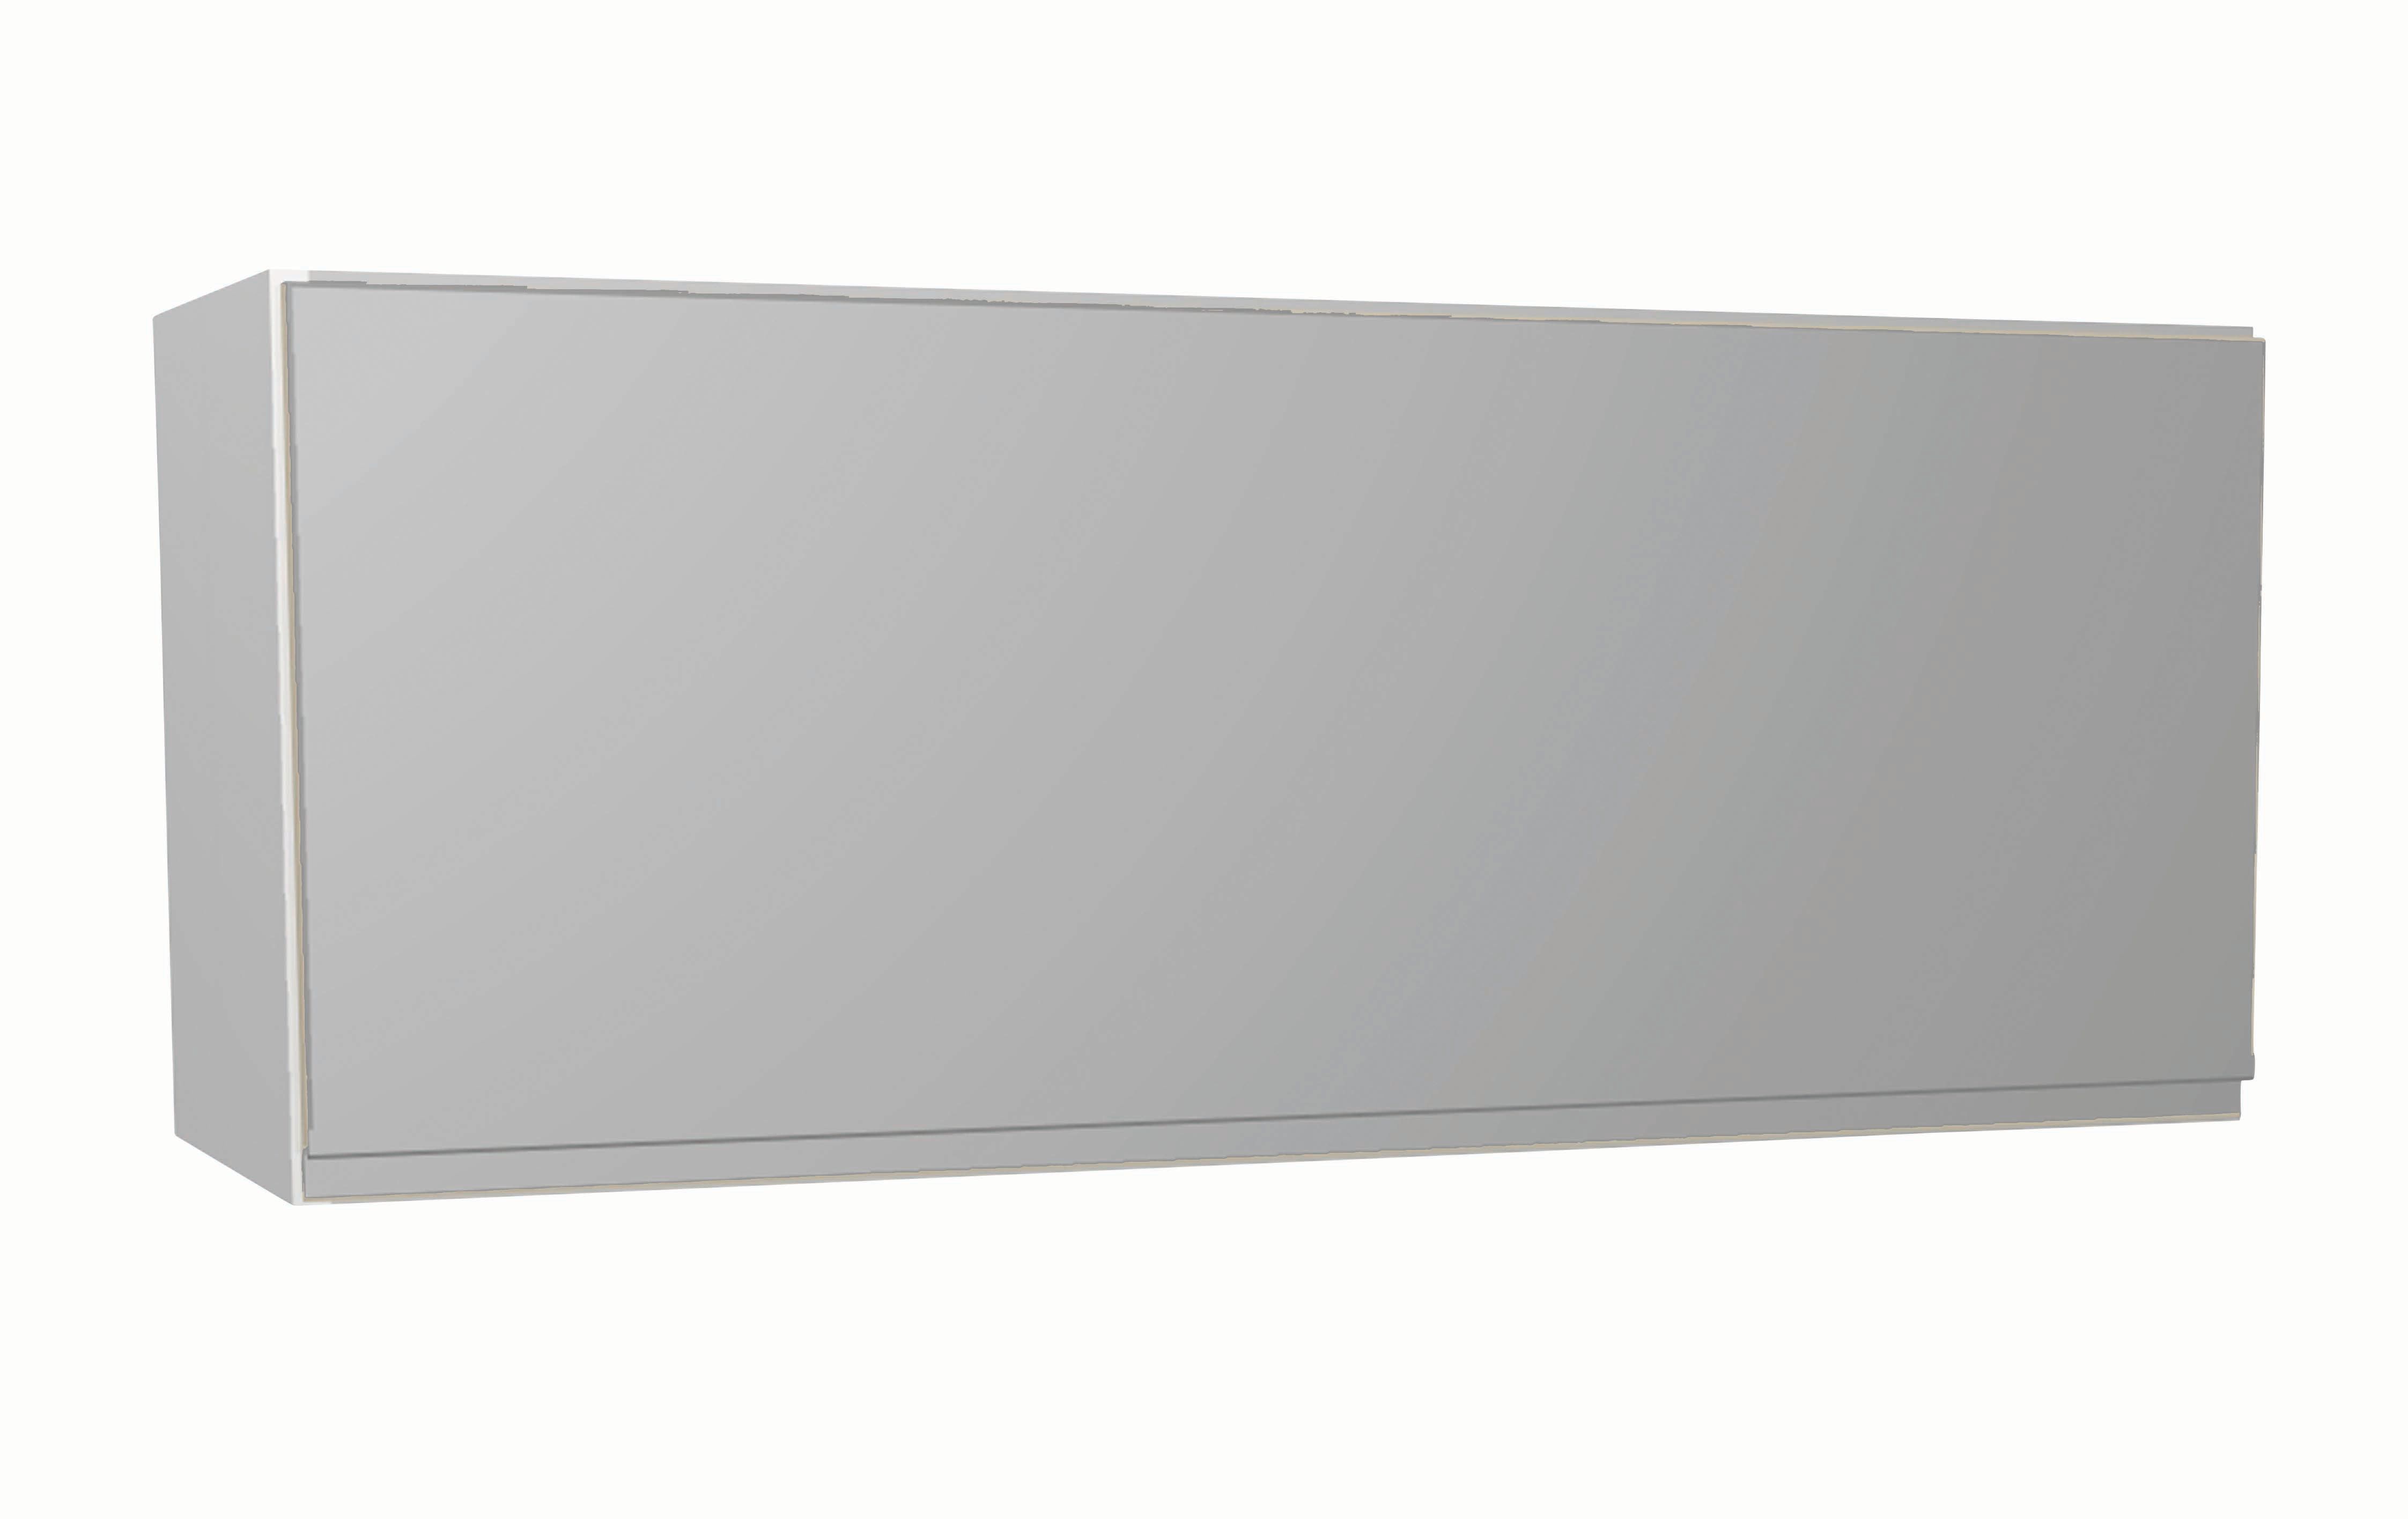 Image of Wickes Madison Grey Gloss Handleless Narrow Wall Unit - 900mm